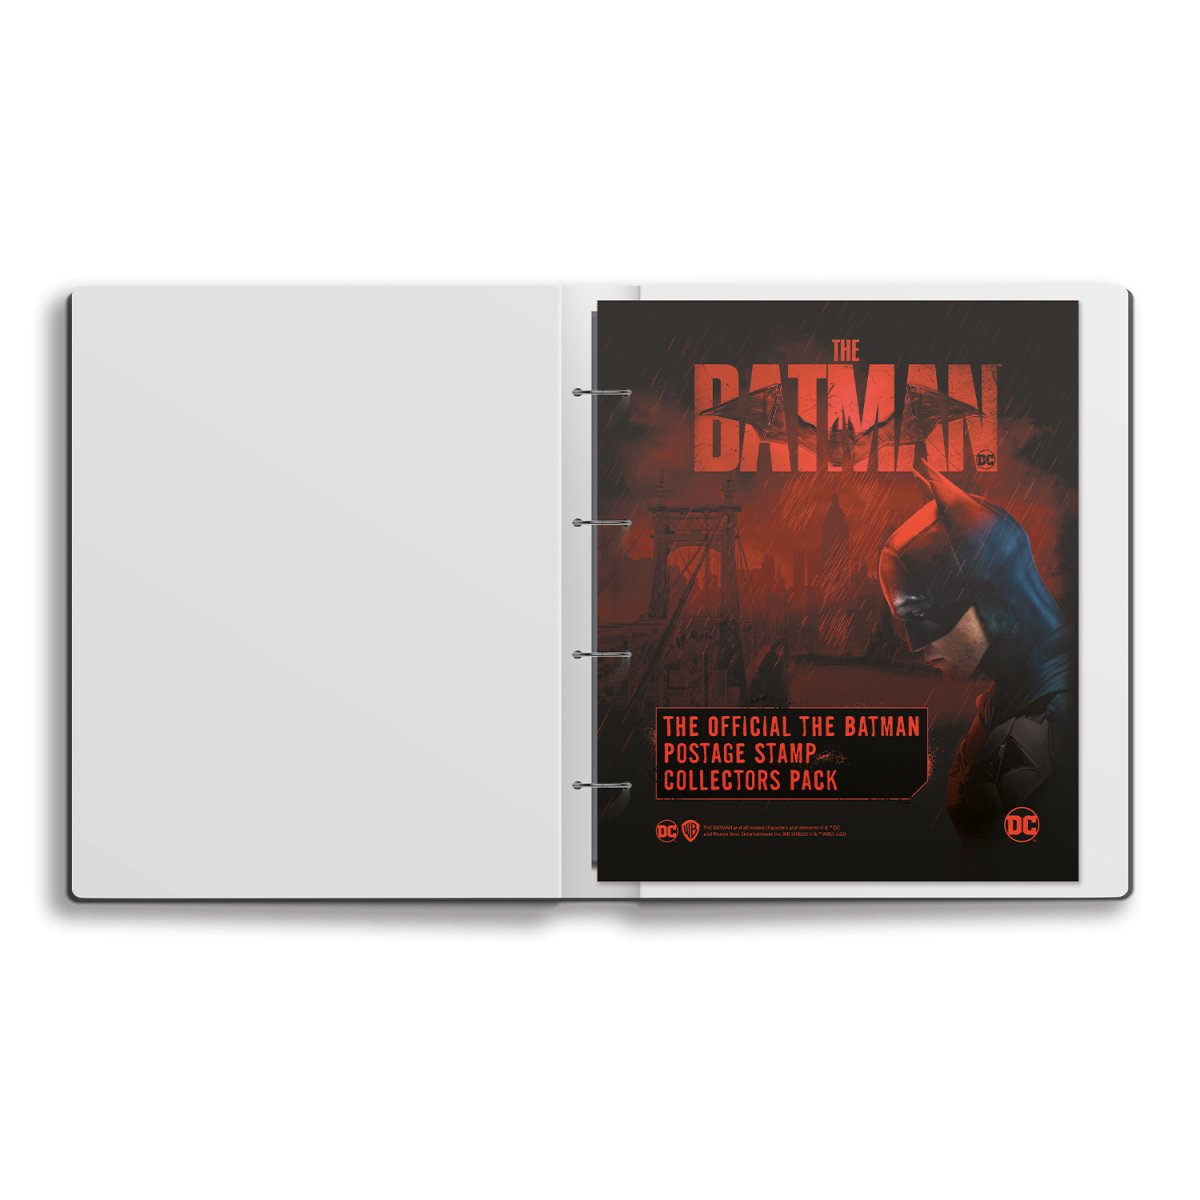 Verzamelalbum “The Official The Batman Collectors Packs” - Edel Collecties